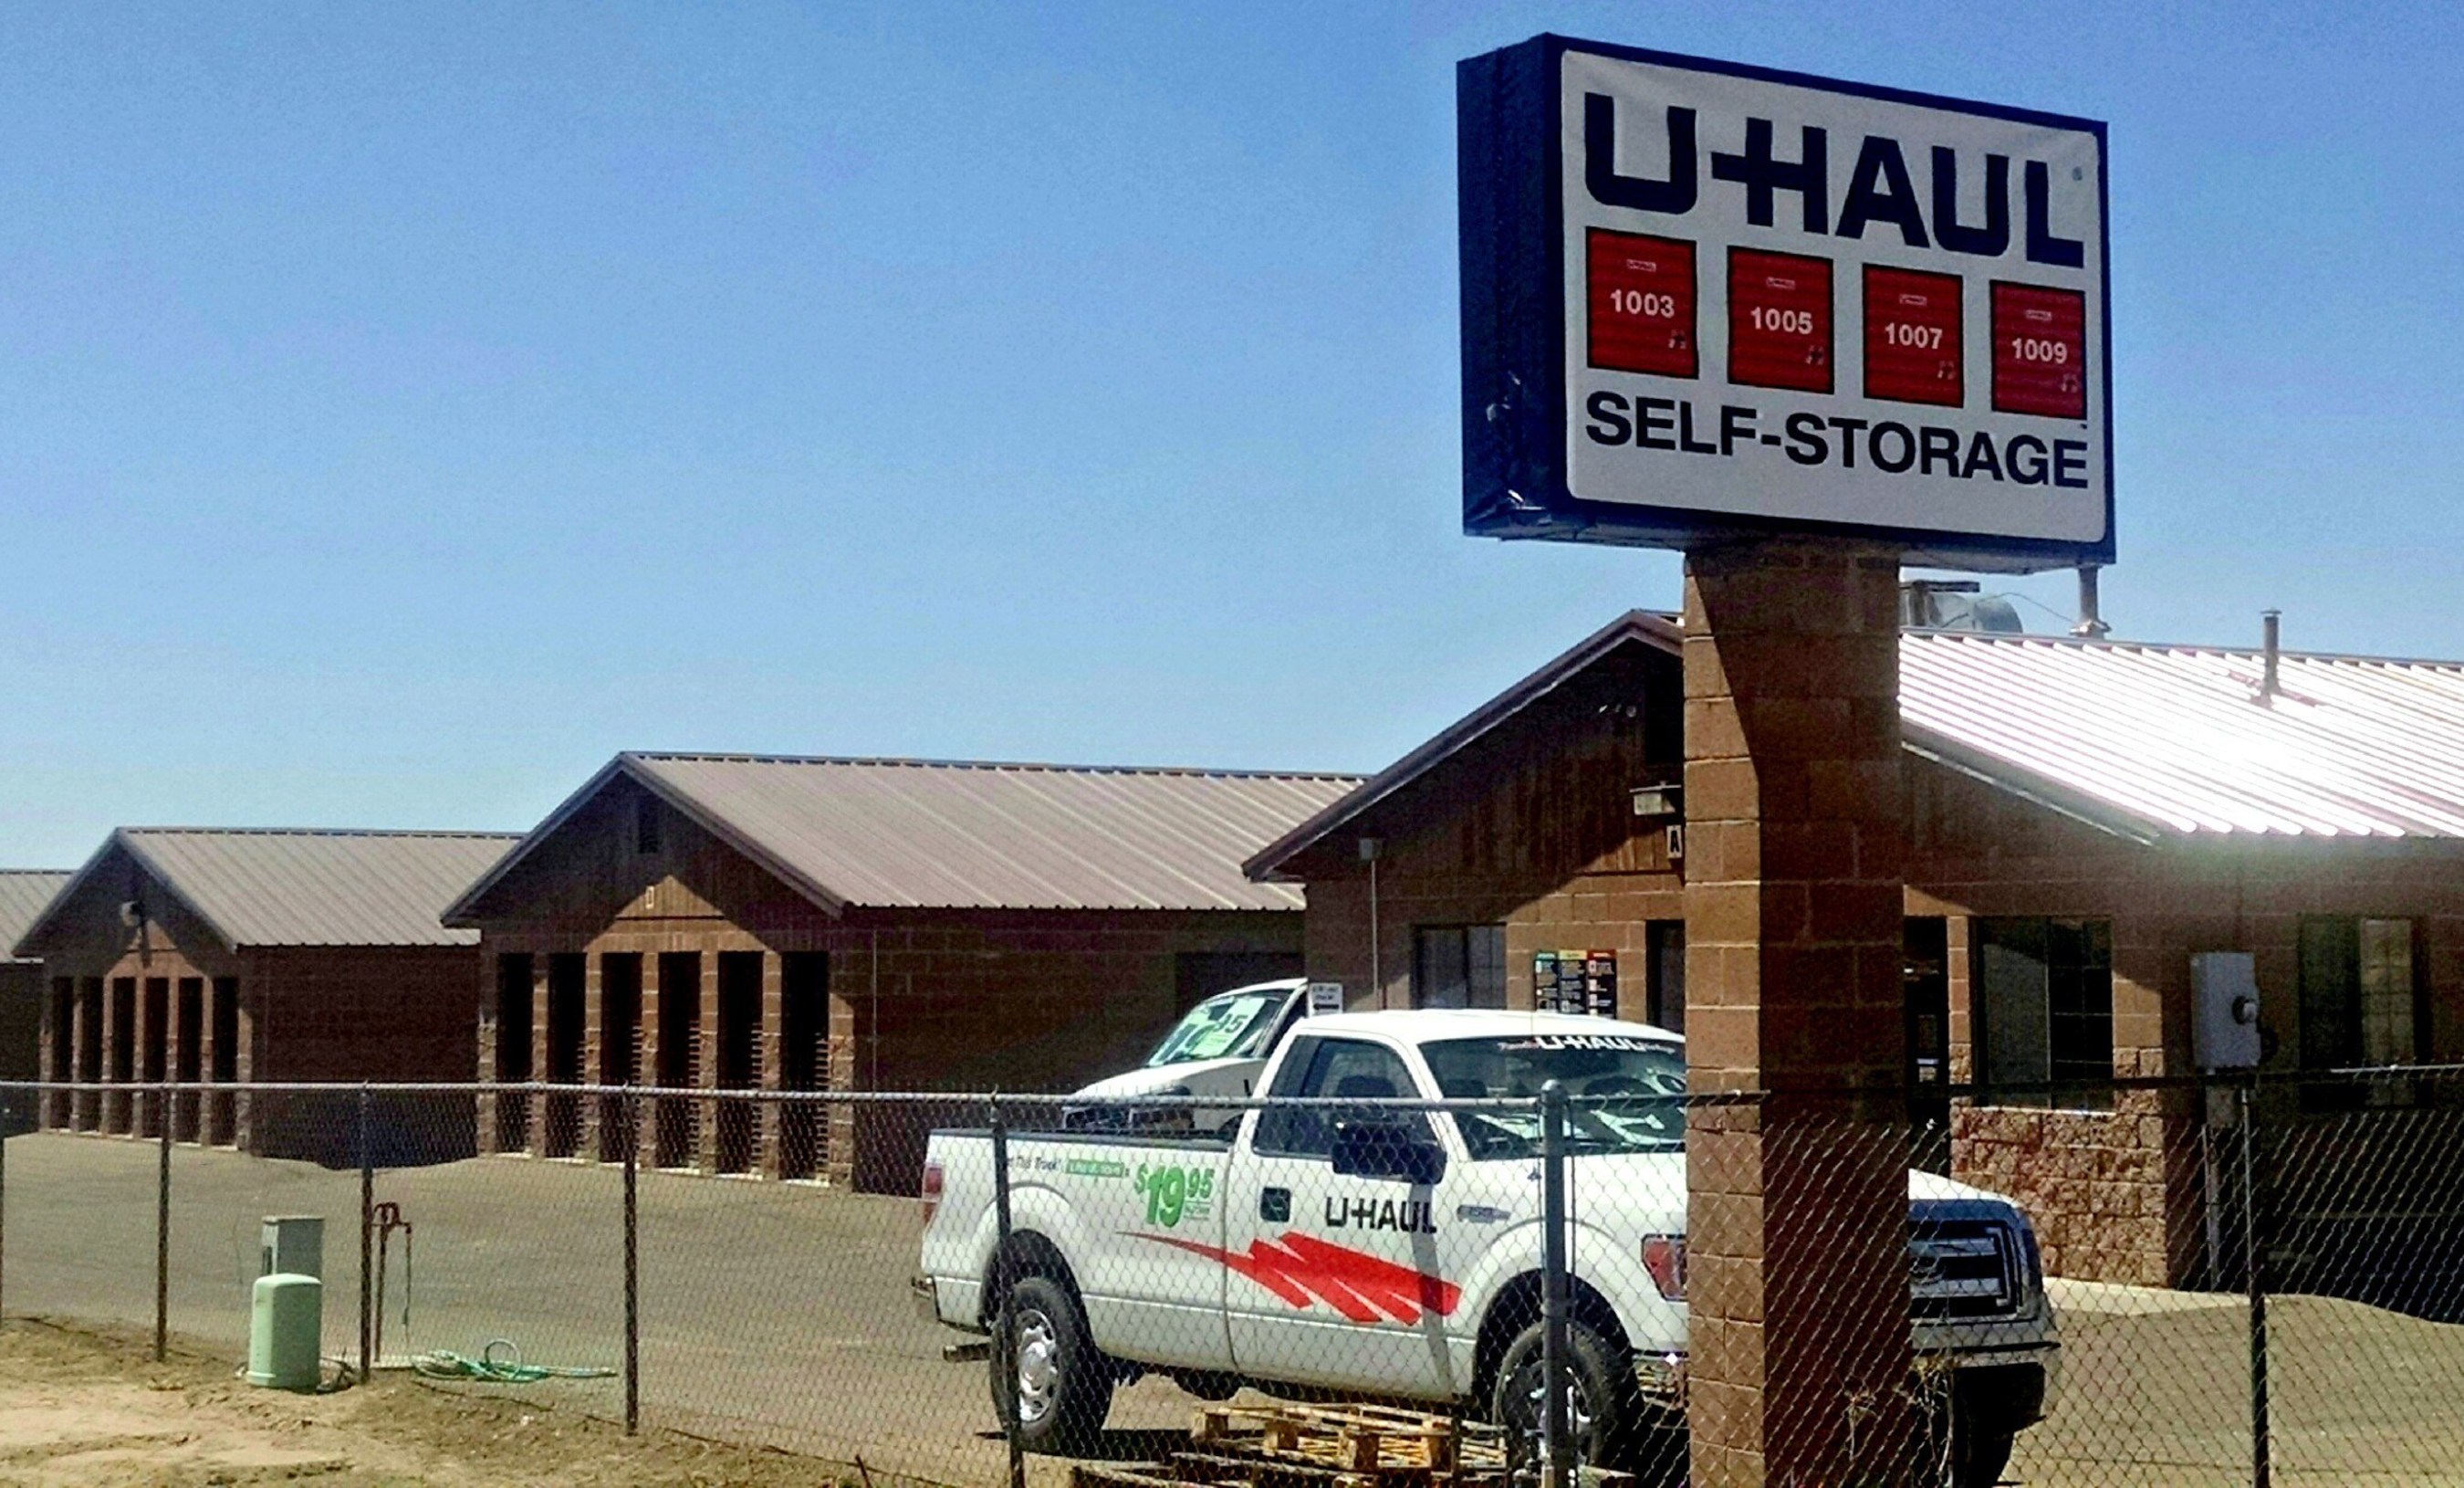 U-Haul Company of New Mexico Expands Operations in Rio Rancho (PRNewsFoto/U-Haul)